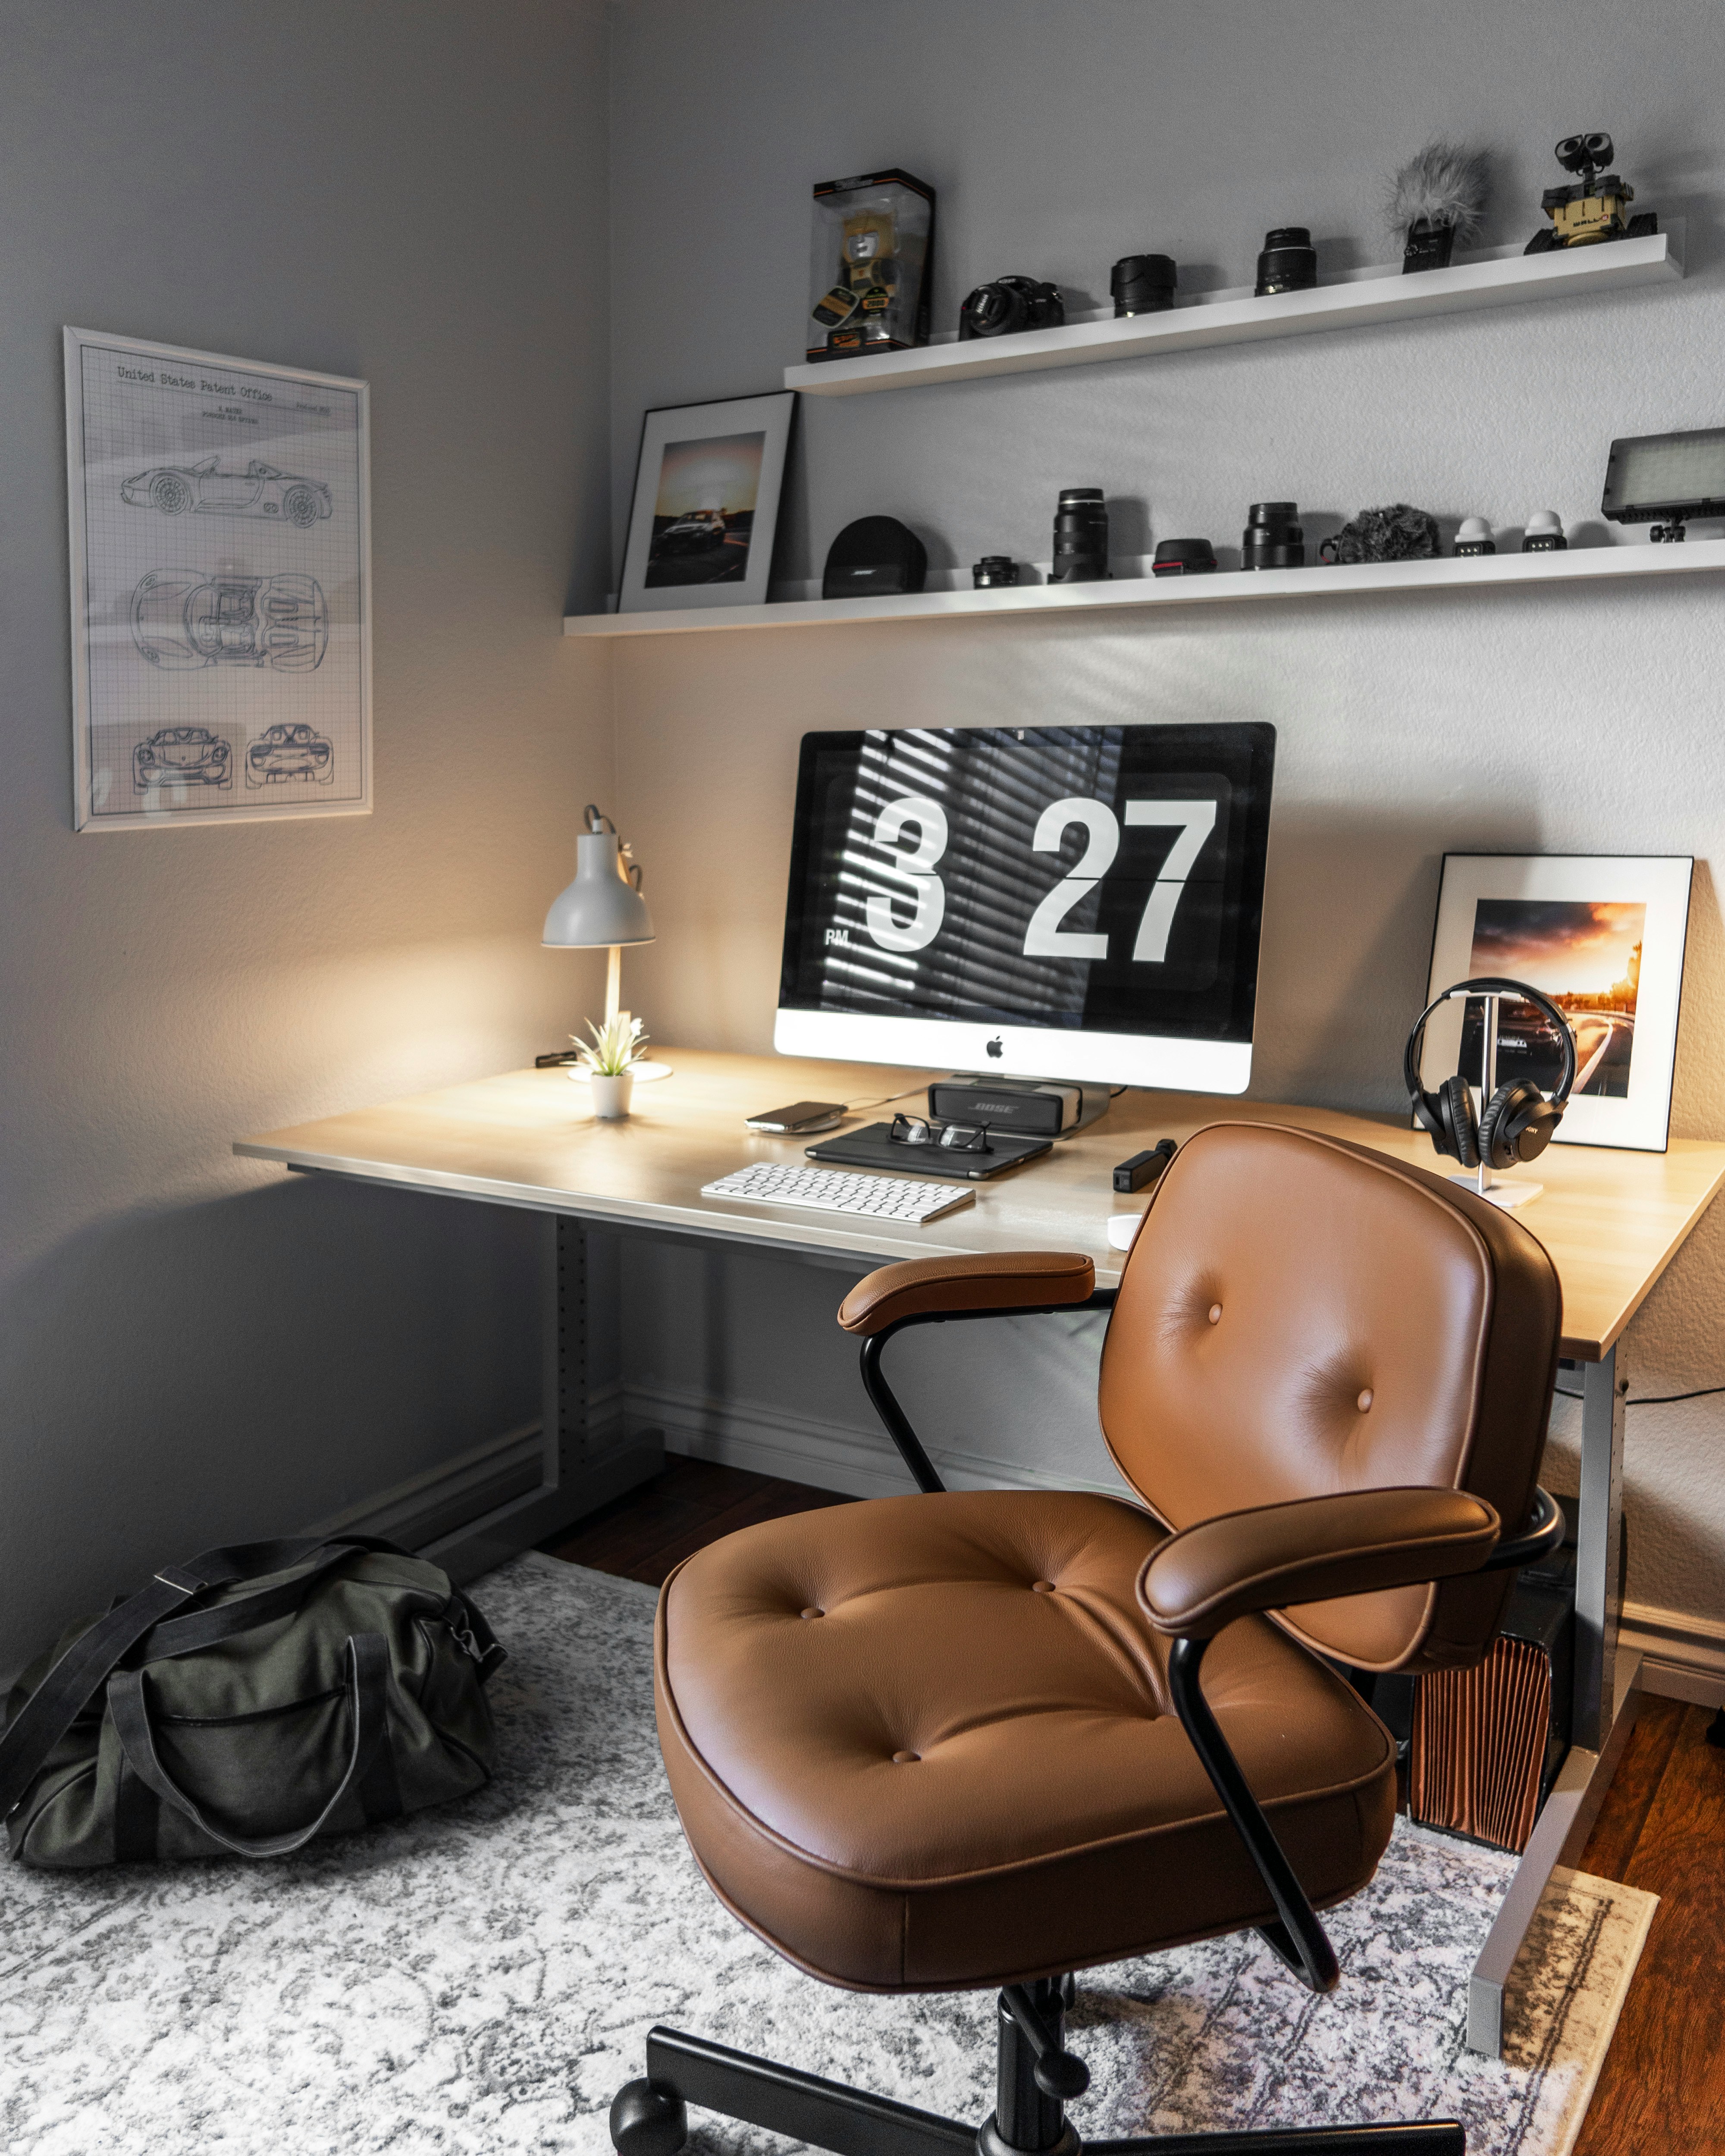 A home office | Source: Unsplash